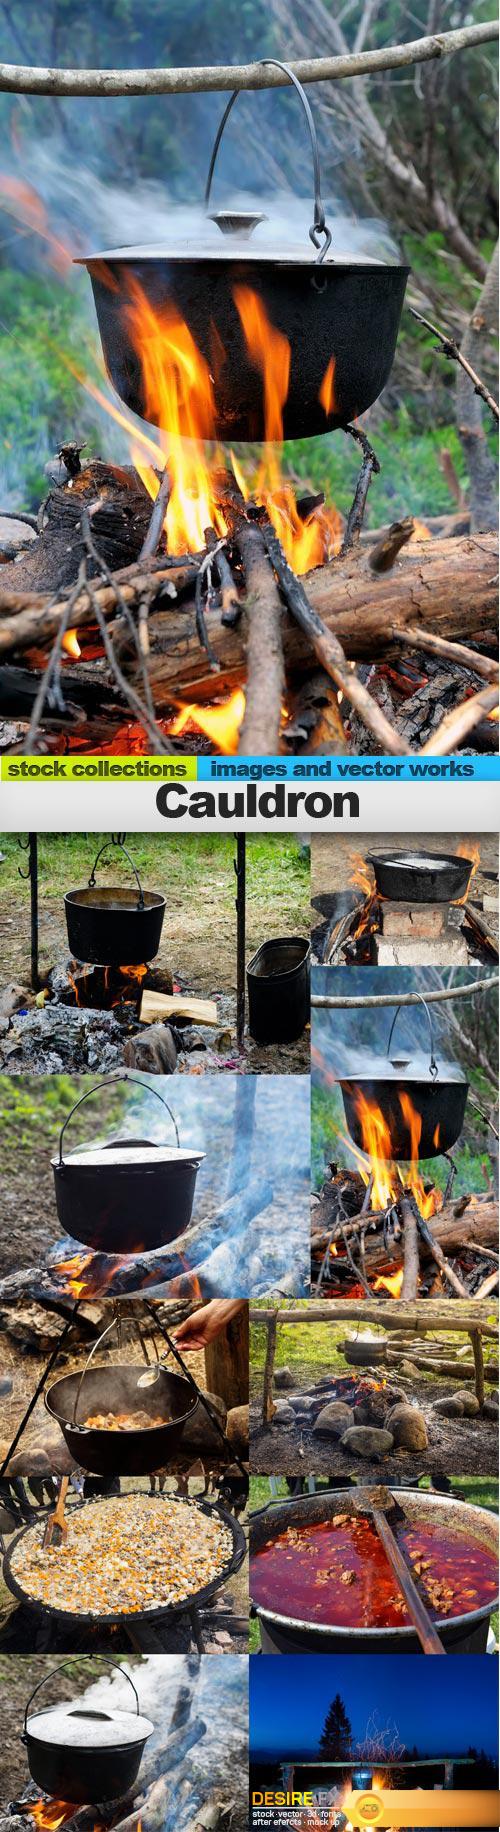 Cauldron, 10 x UHQ JPEG